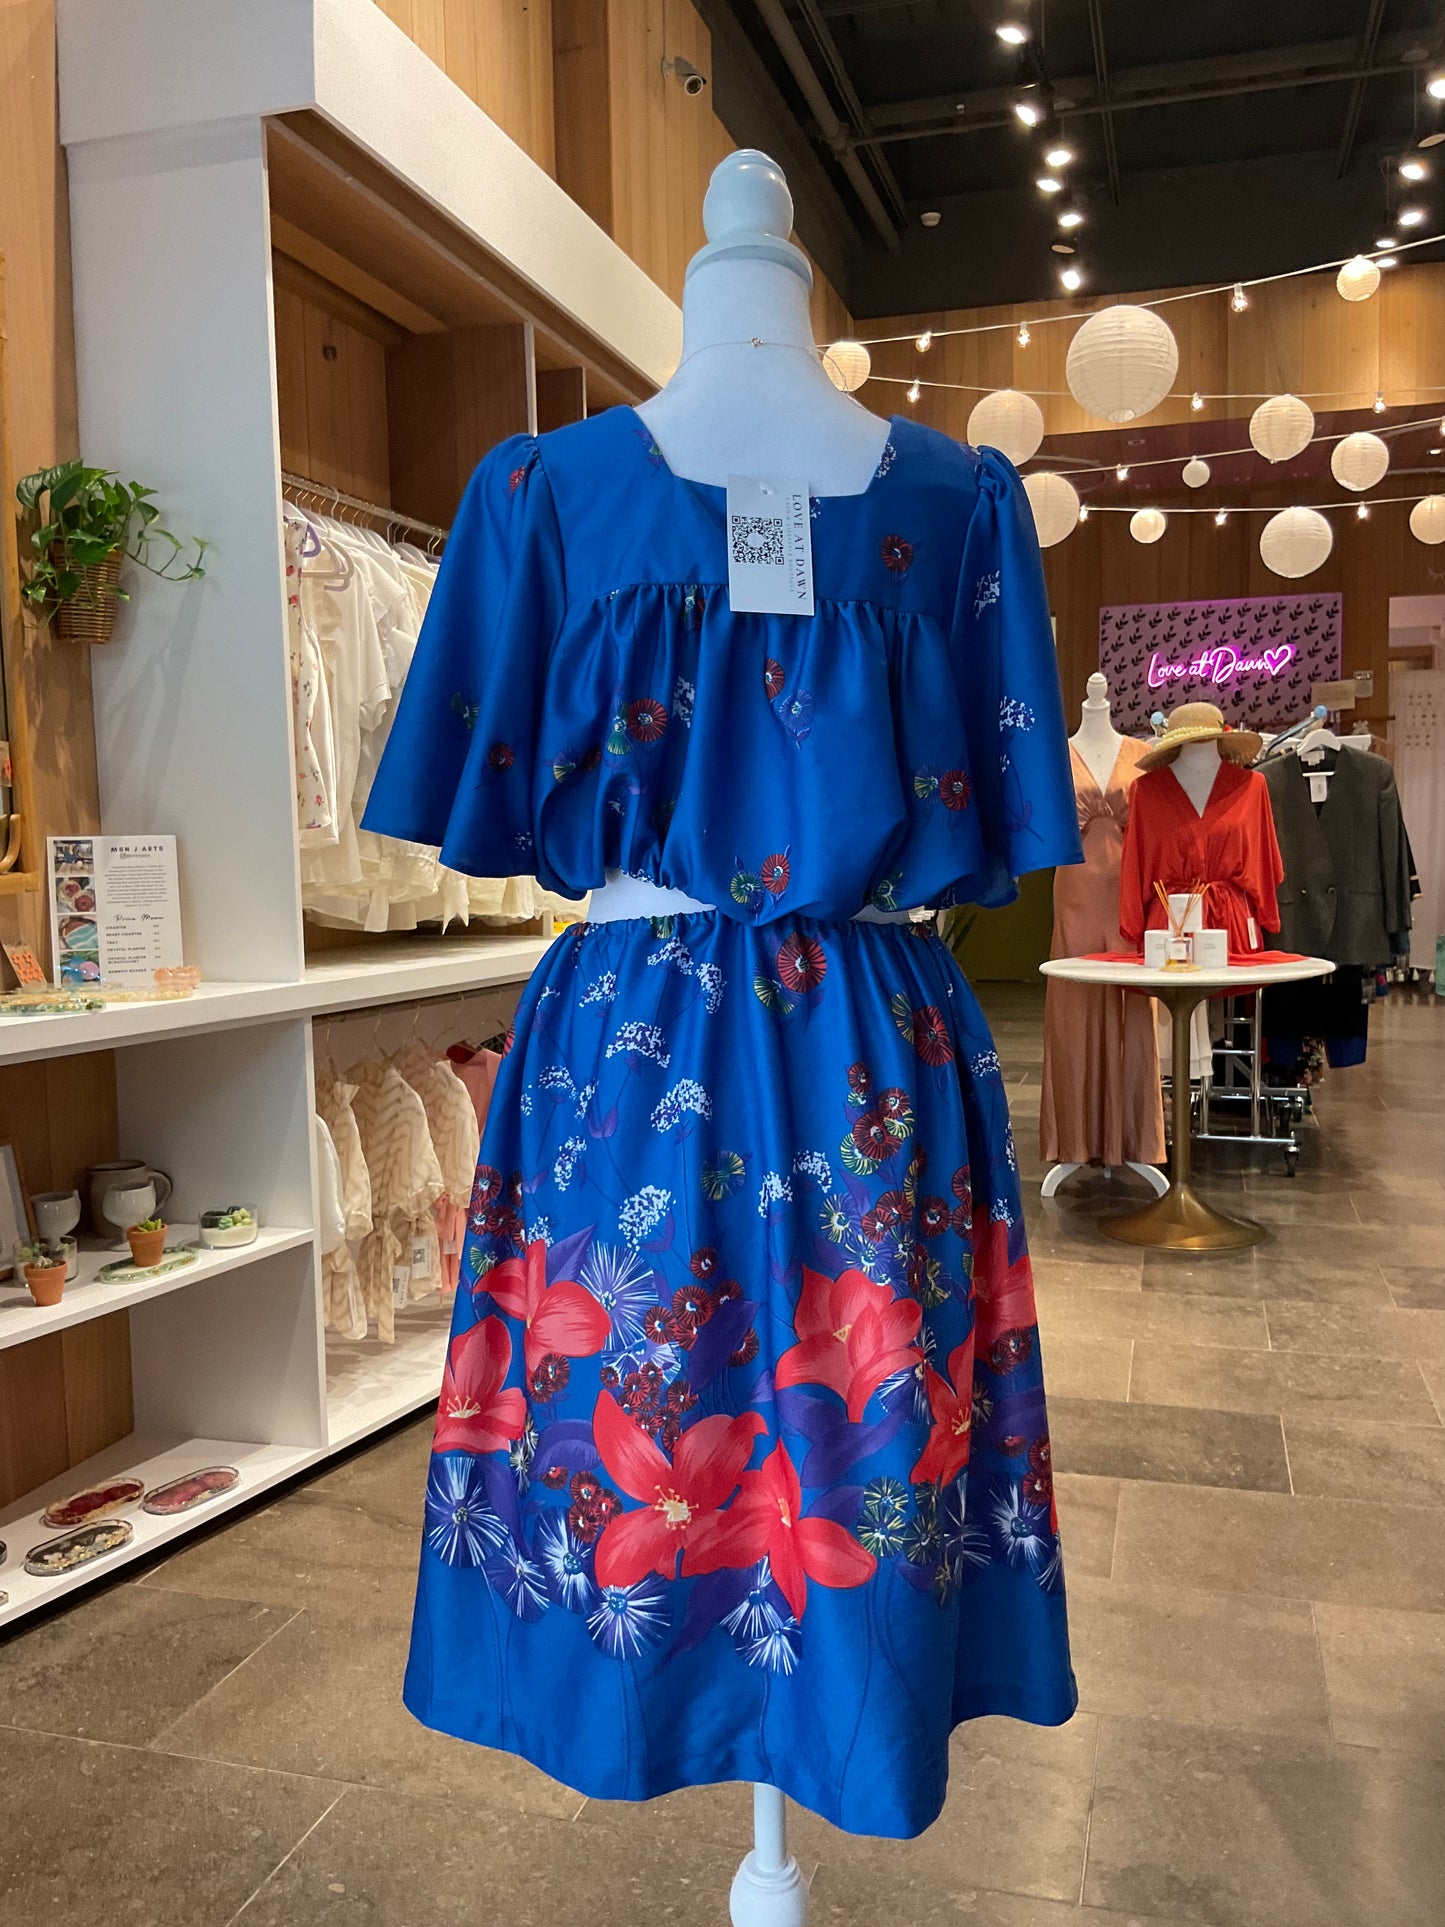 Vintage Dress ~ Blue Flower Dress (Repurposed)